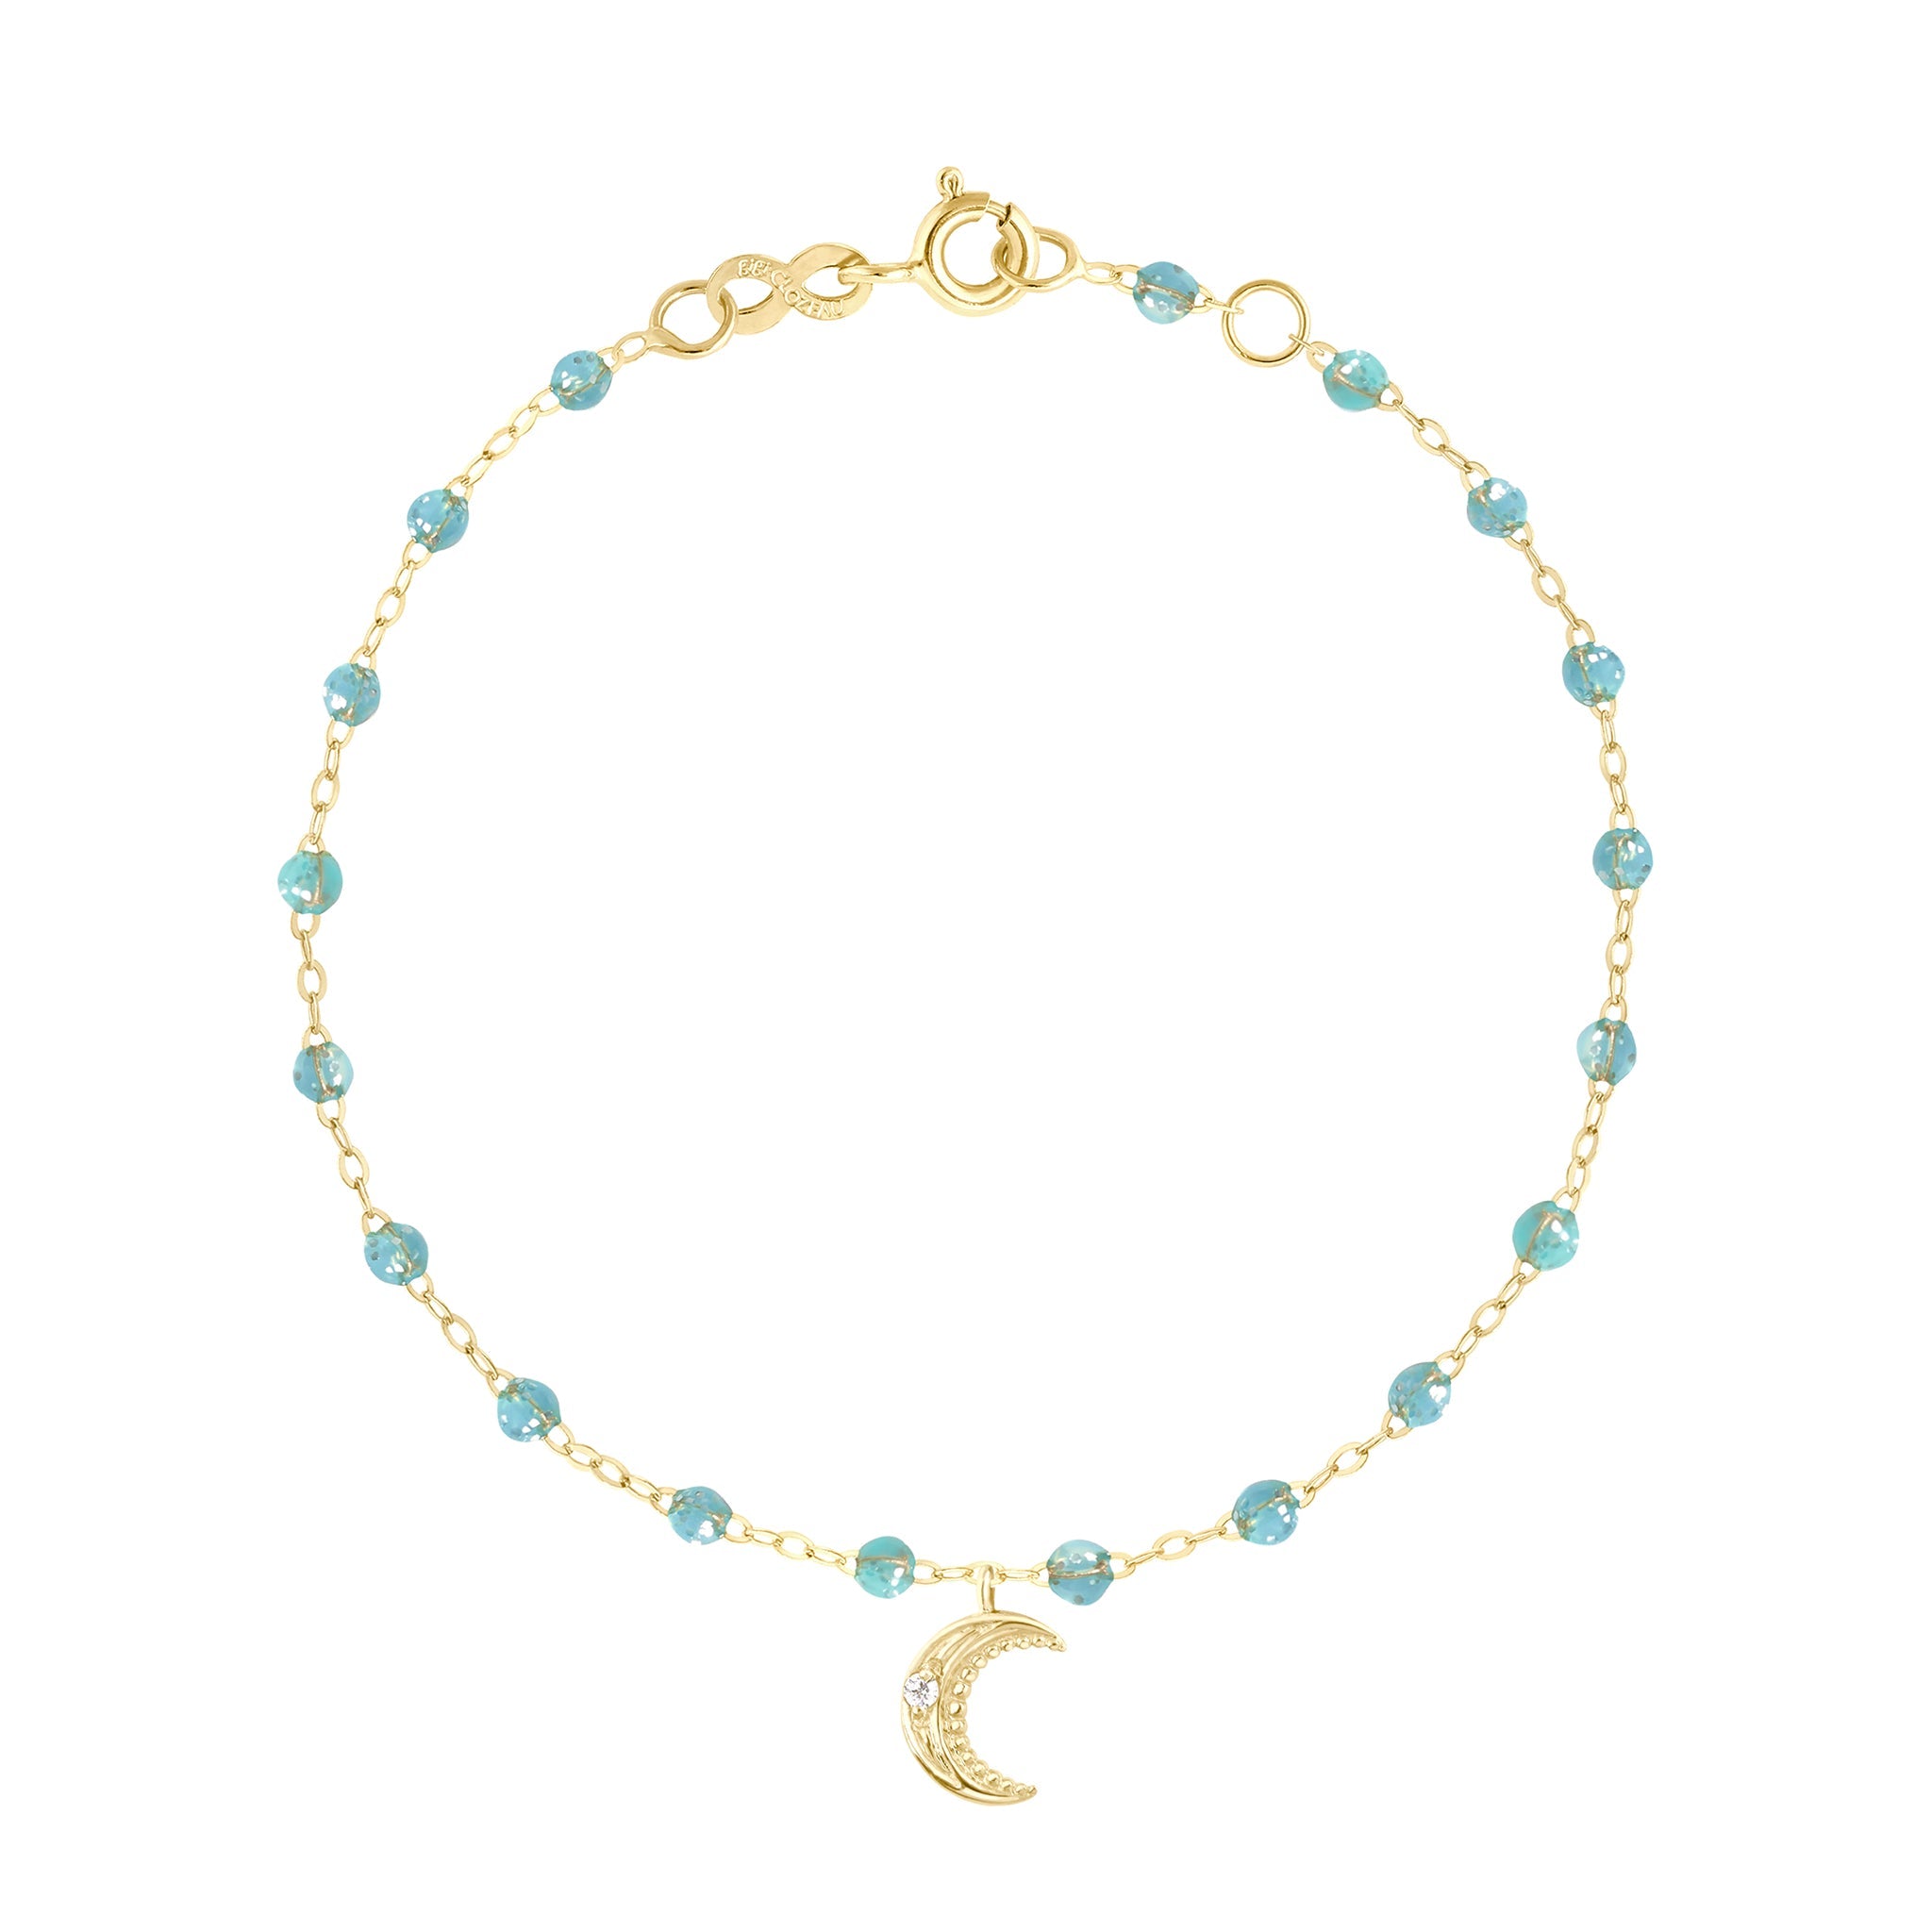 Bracelet aqua Lune, diamants, or jaune, 17 cm pirate Référence :  b3lu001j6217di -1